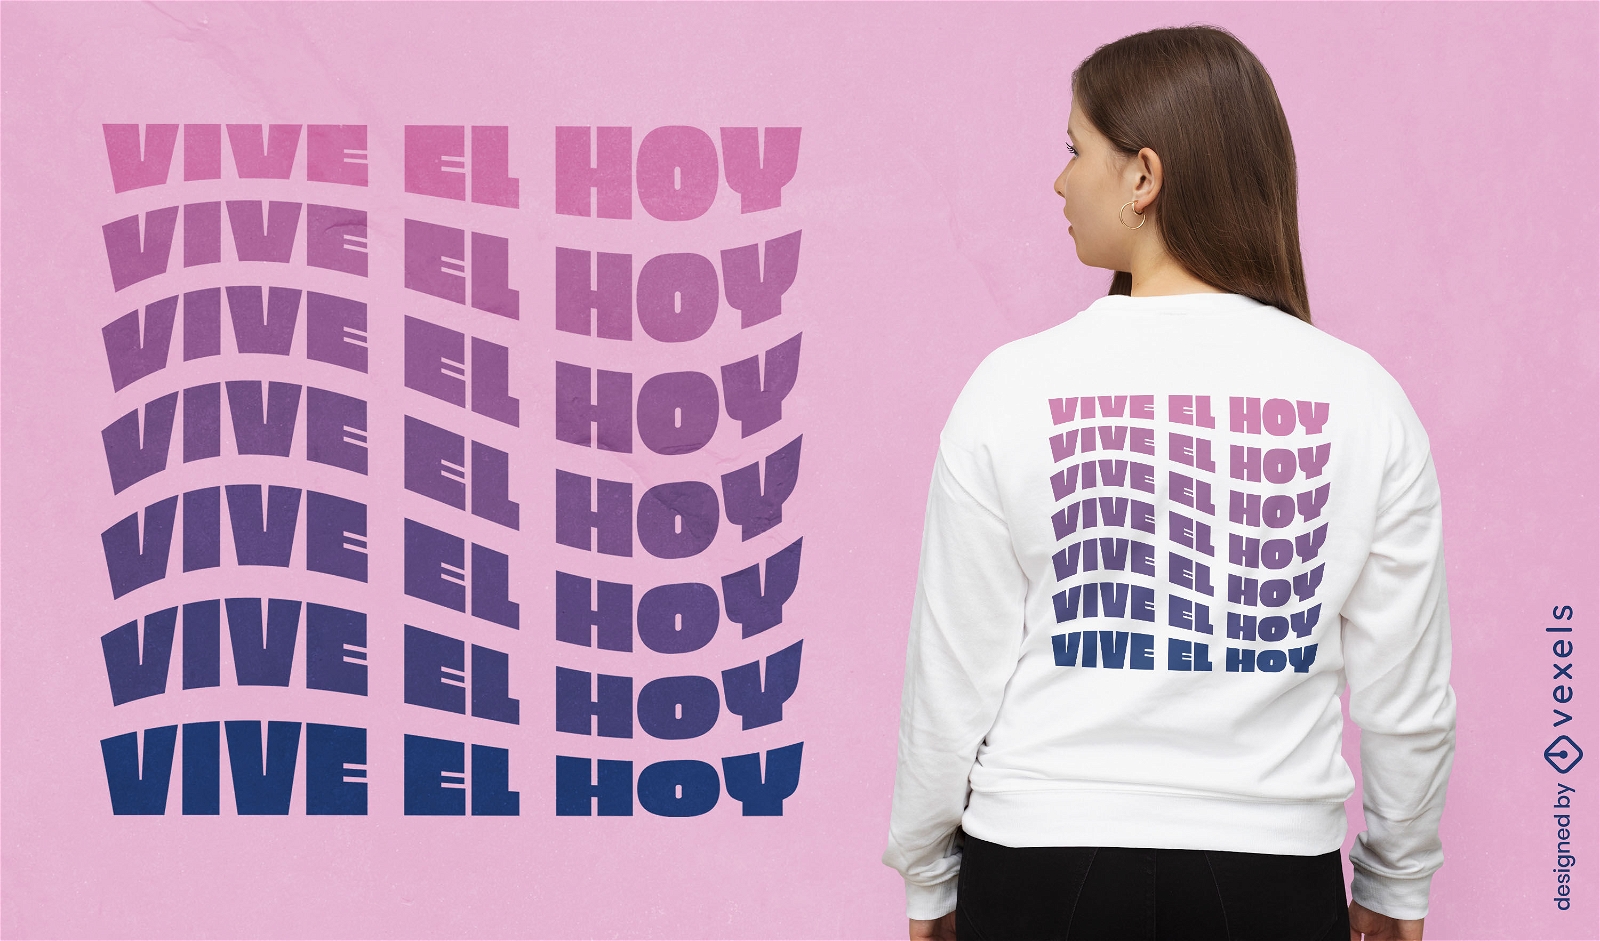 Vive el hoy spanisches Zitat-T-Shirt-Design